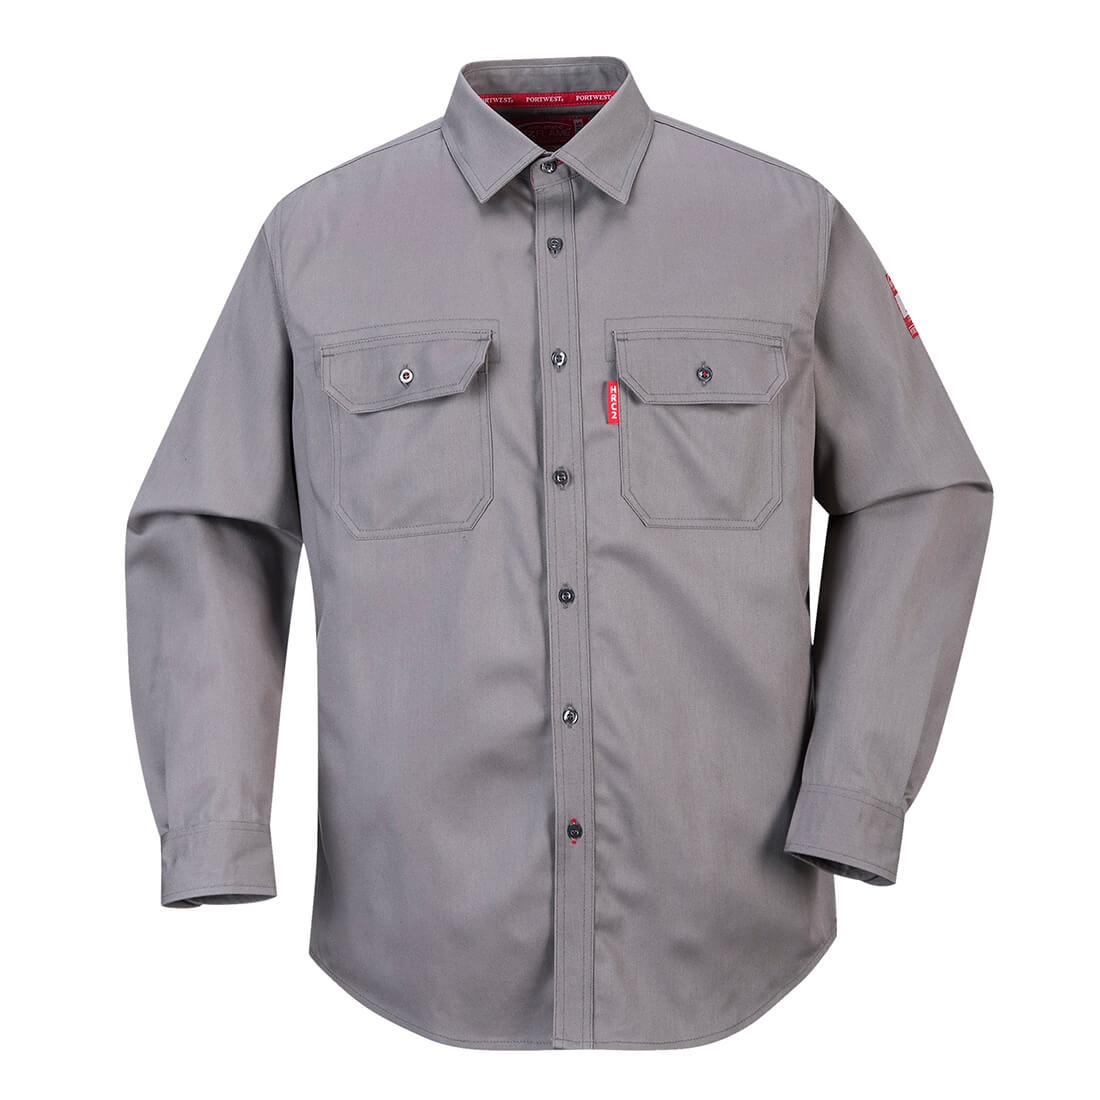 Image of Biz Flame Mens Flame Resistant Work Shirt Grey L